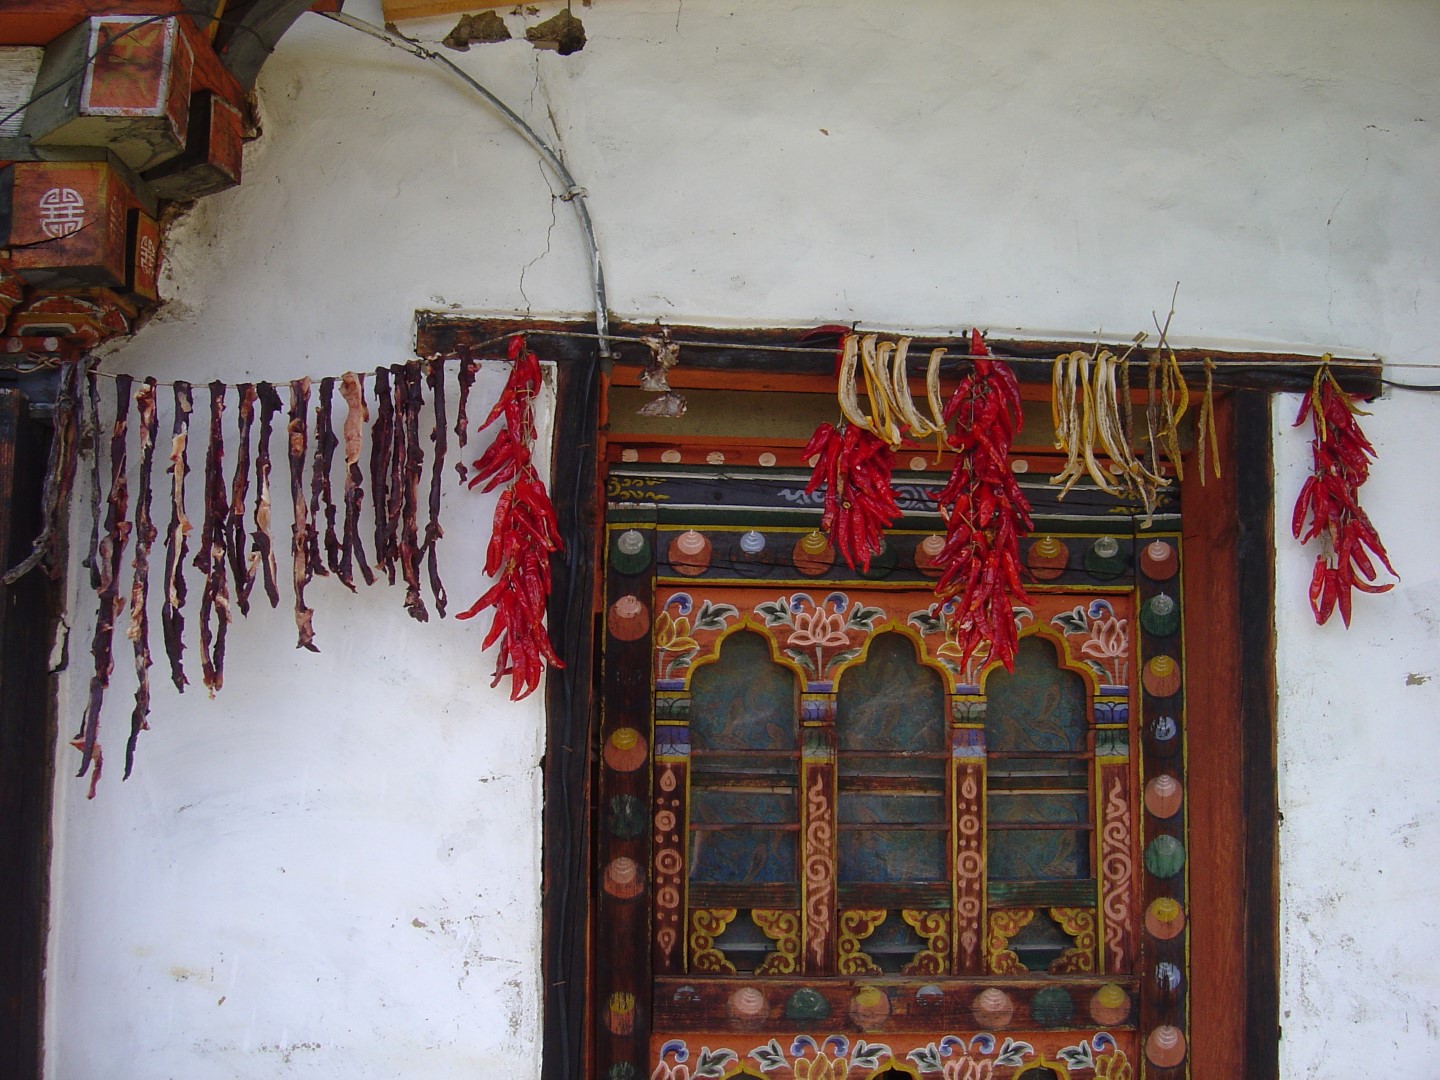 wp-content/uploads/itineraries/Bhutan/bhutan (1).jpg